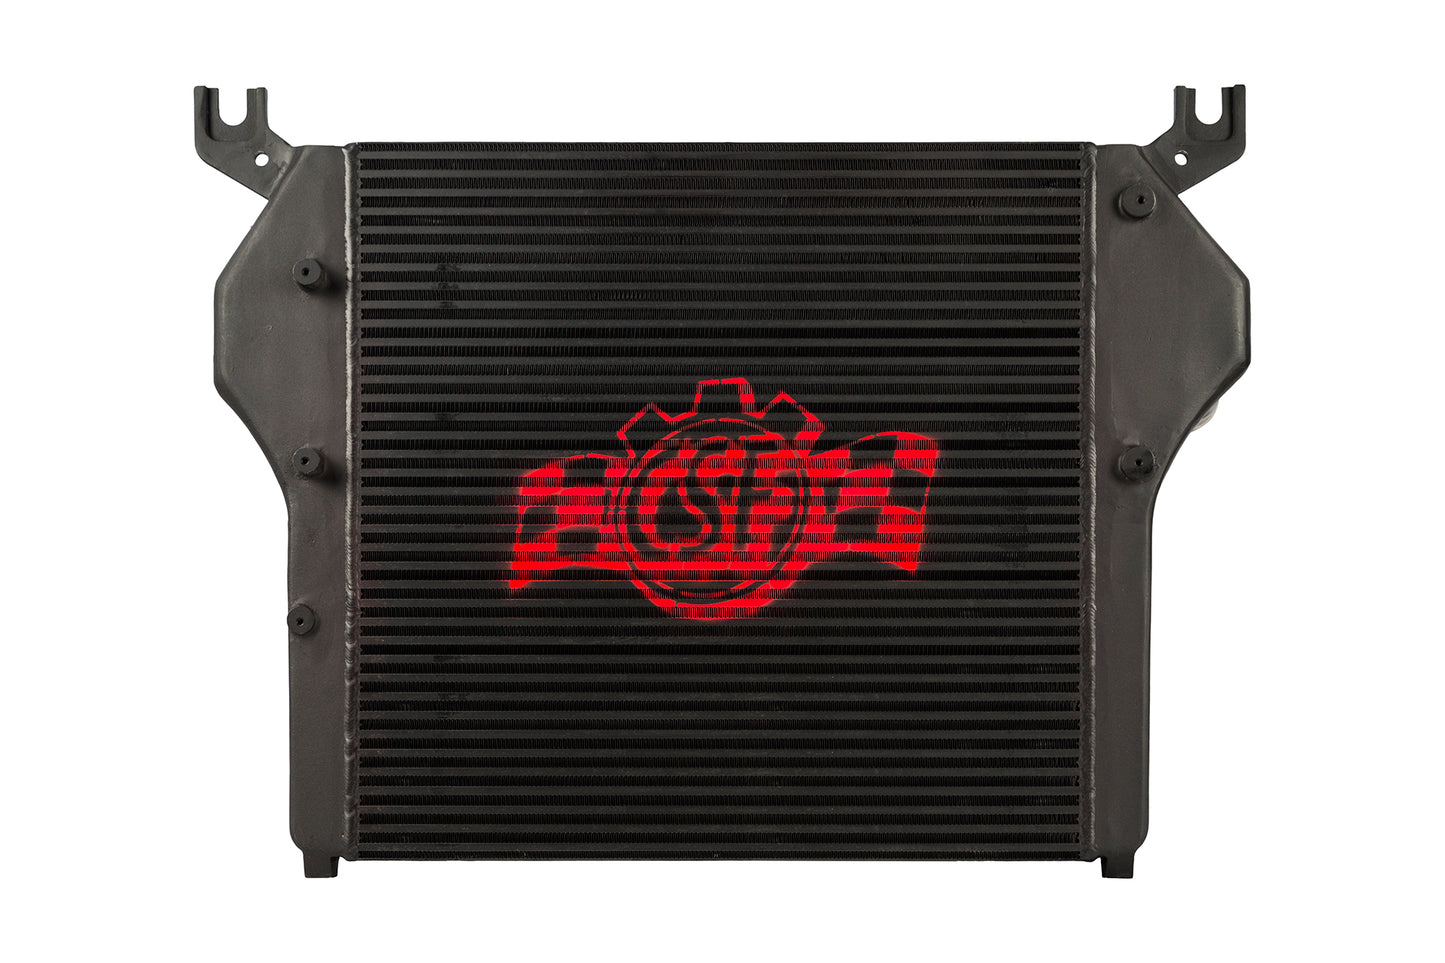 CSF Cooling - Racing & High Performance Division - 7100 - Intercooler - 10-12 Ram 2500 / 3500 6.7L Cummins Turbo Diesel Heavy Duty Intercooler - P/N: 7100